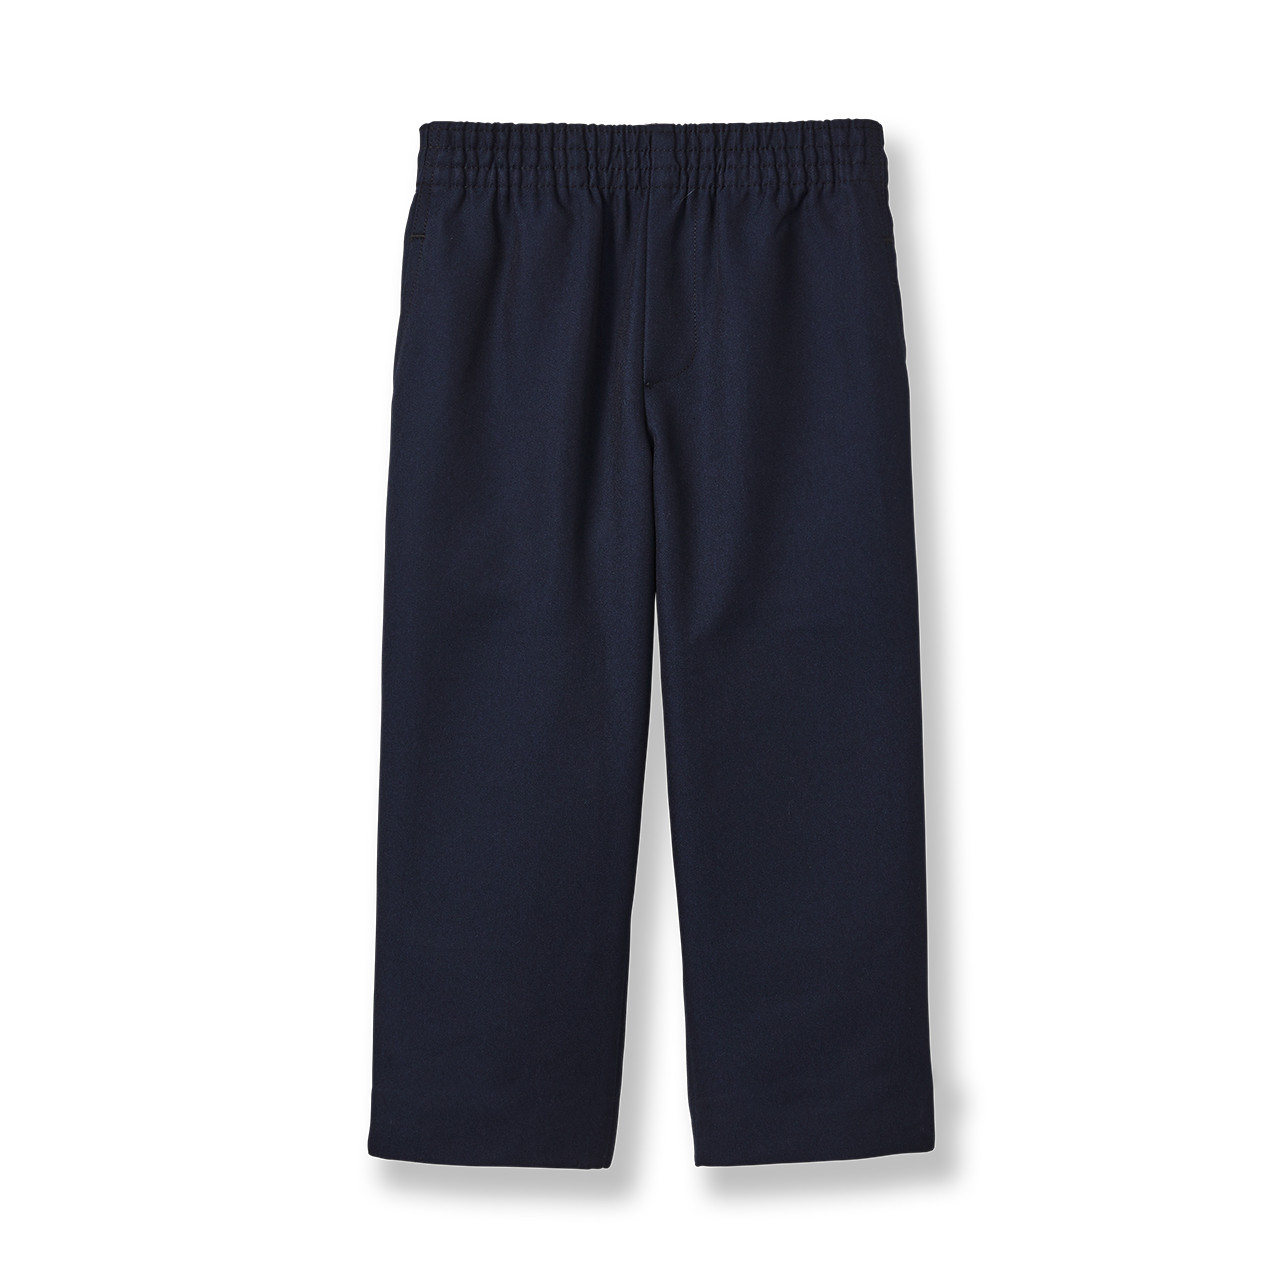 Pull-On Elastic Waist Pants [MD403-PULL ON-NAVY] - FlynnO'Hara Uniforms